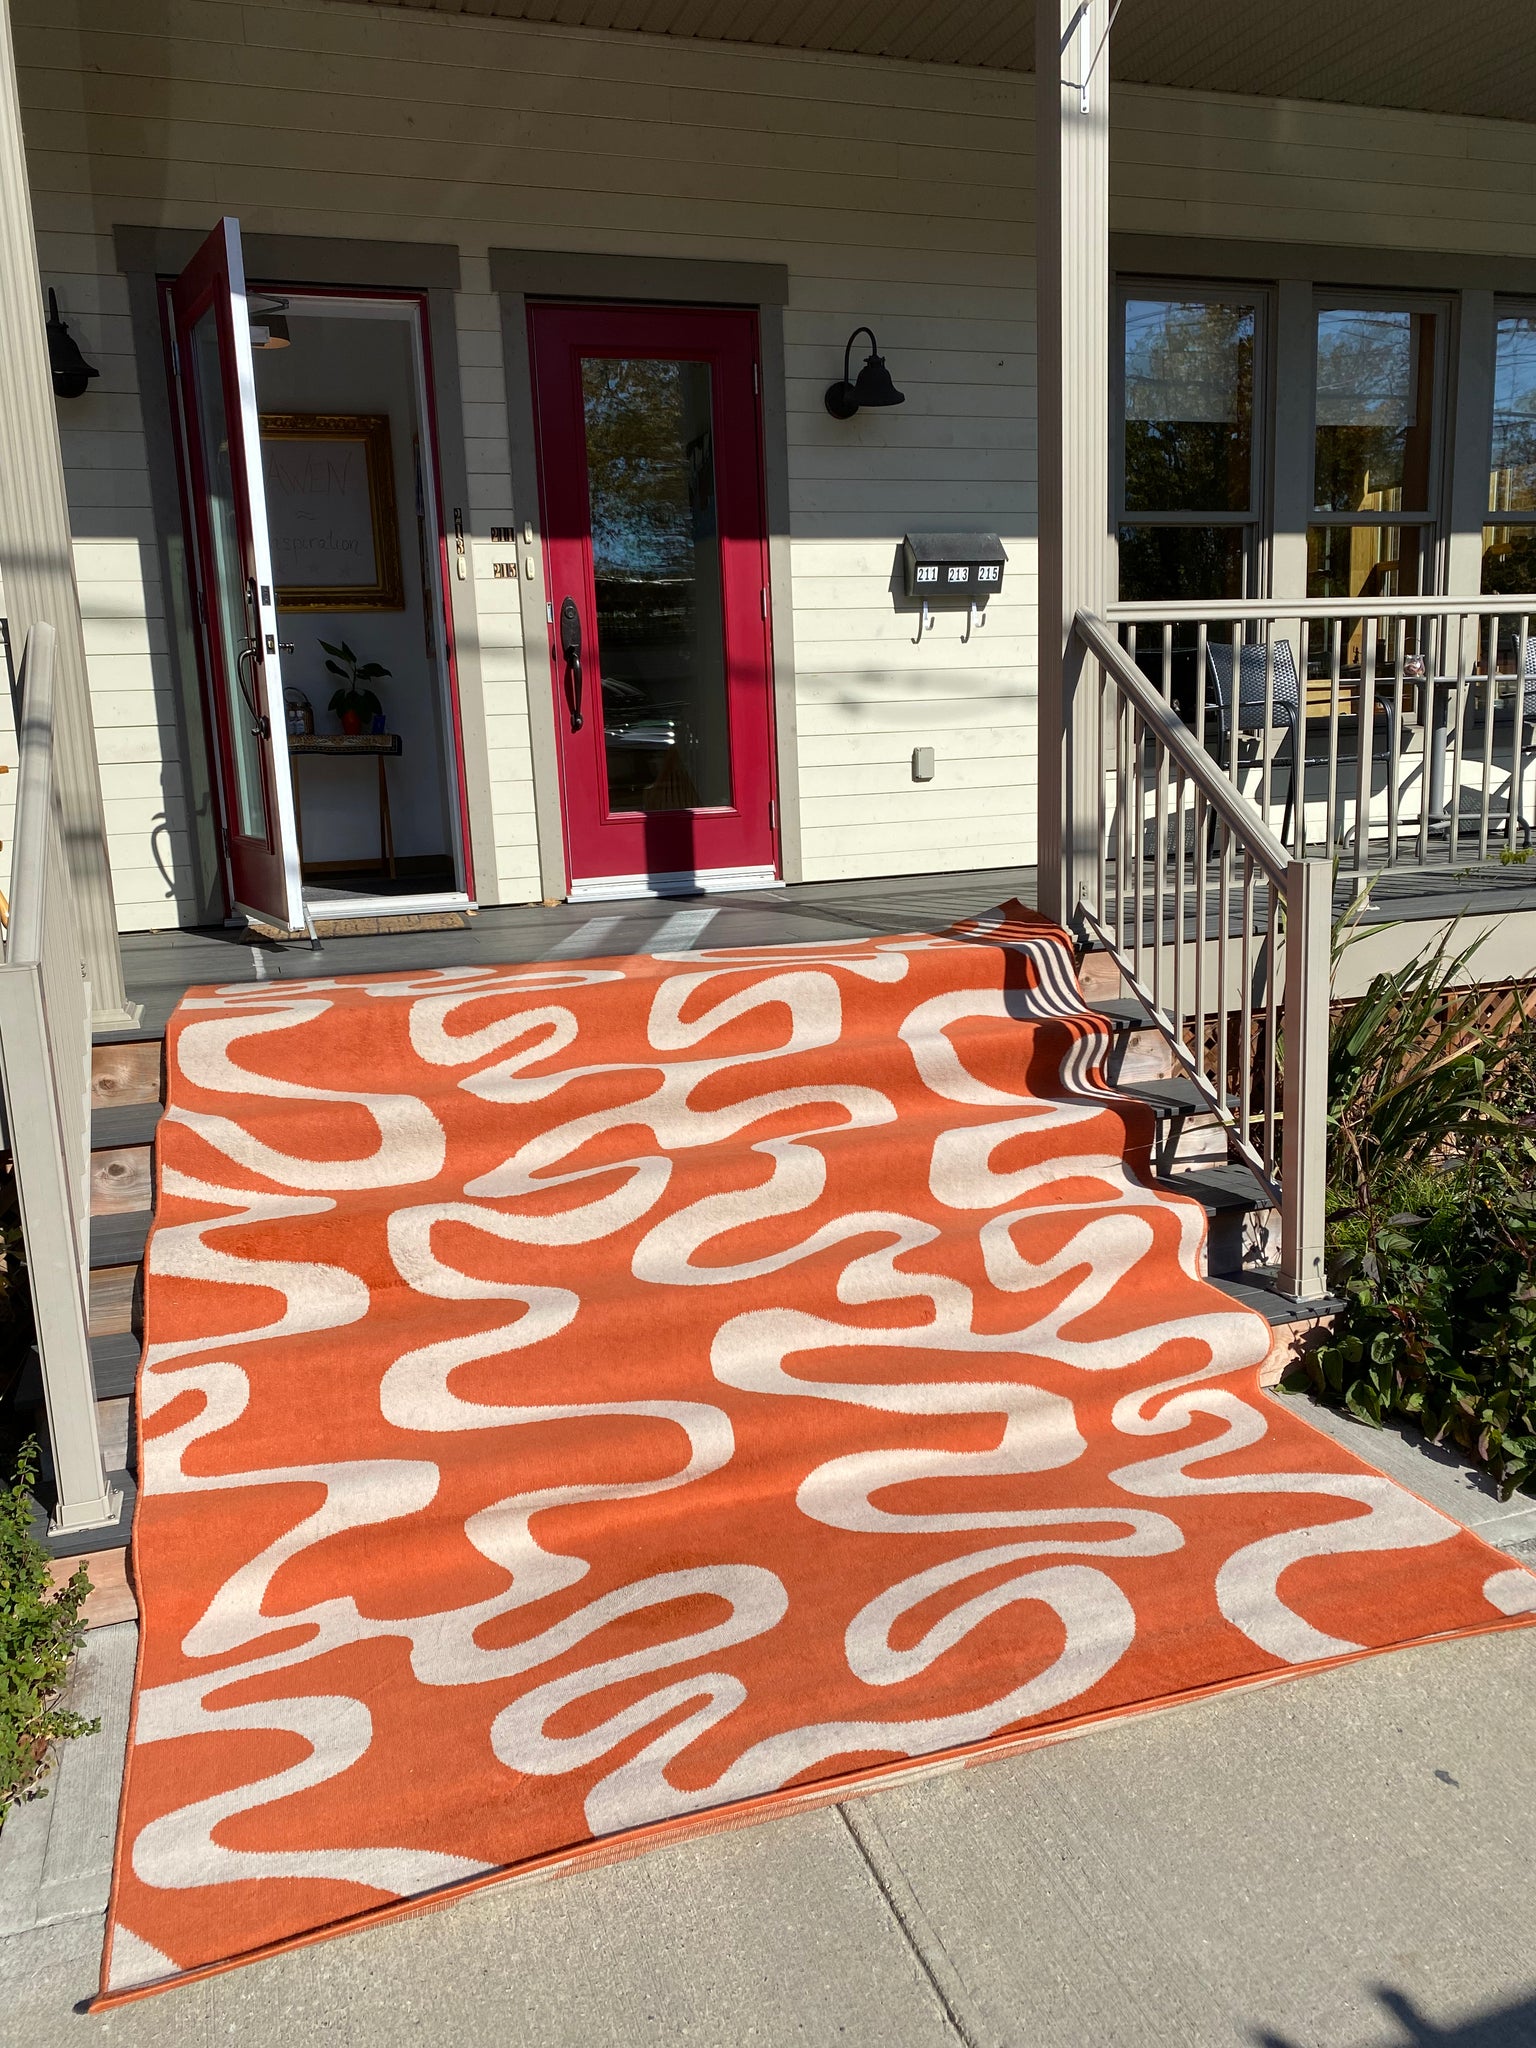 XL orange carpet with white squiggles